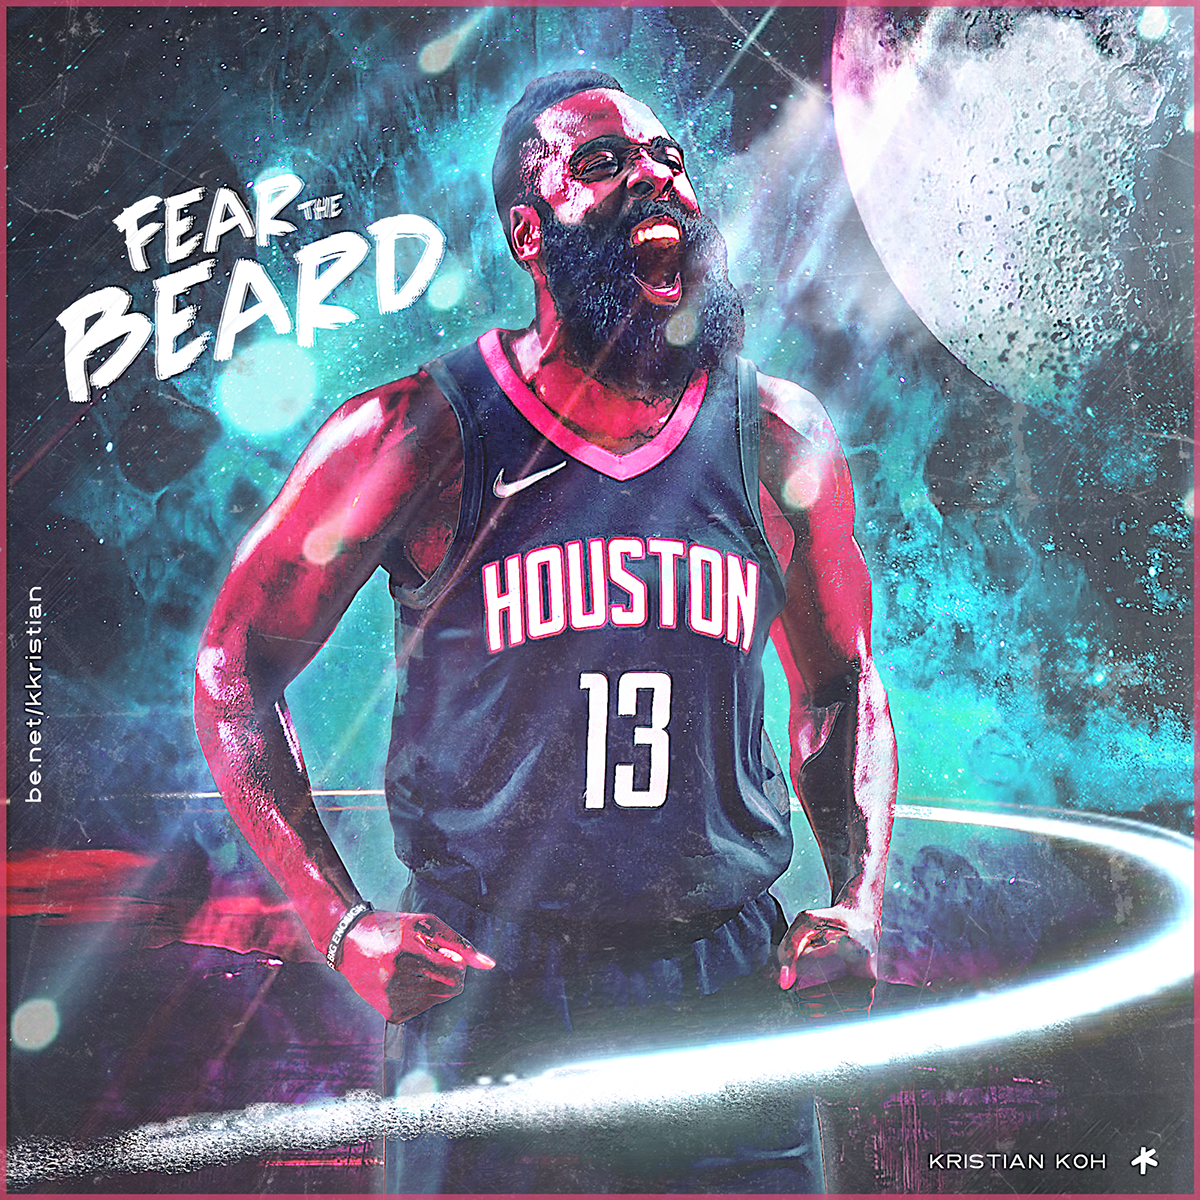 NBA steph curry LeBron basketball Poster Design Photo Manipulation  sports graphics Sports Design poster sport